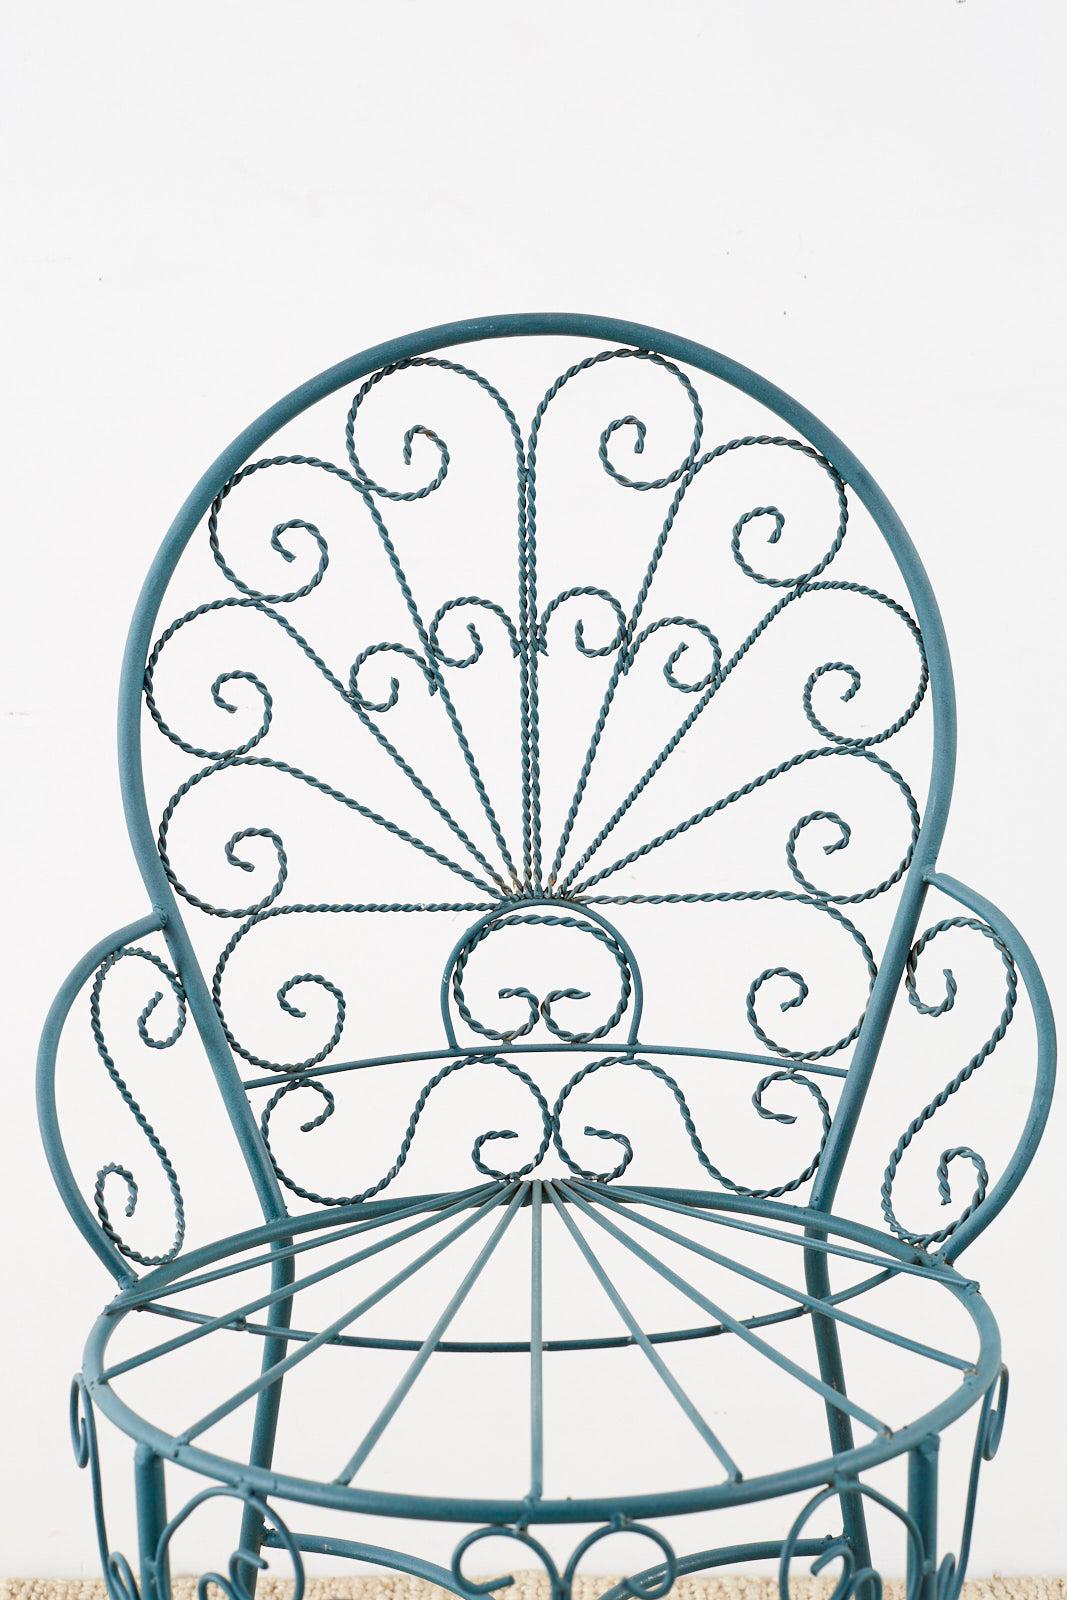 American Pair of Salterini Style Iron Garden Patio Chairs